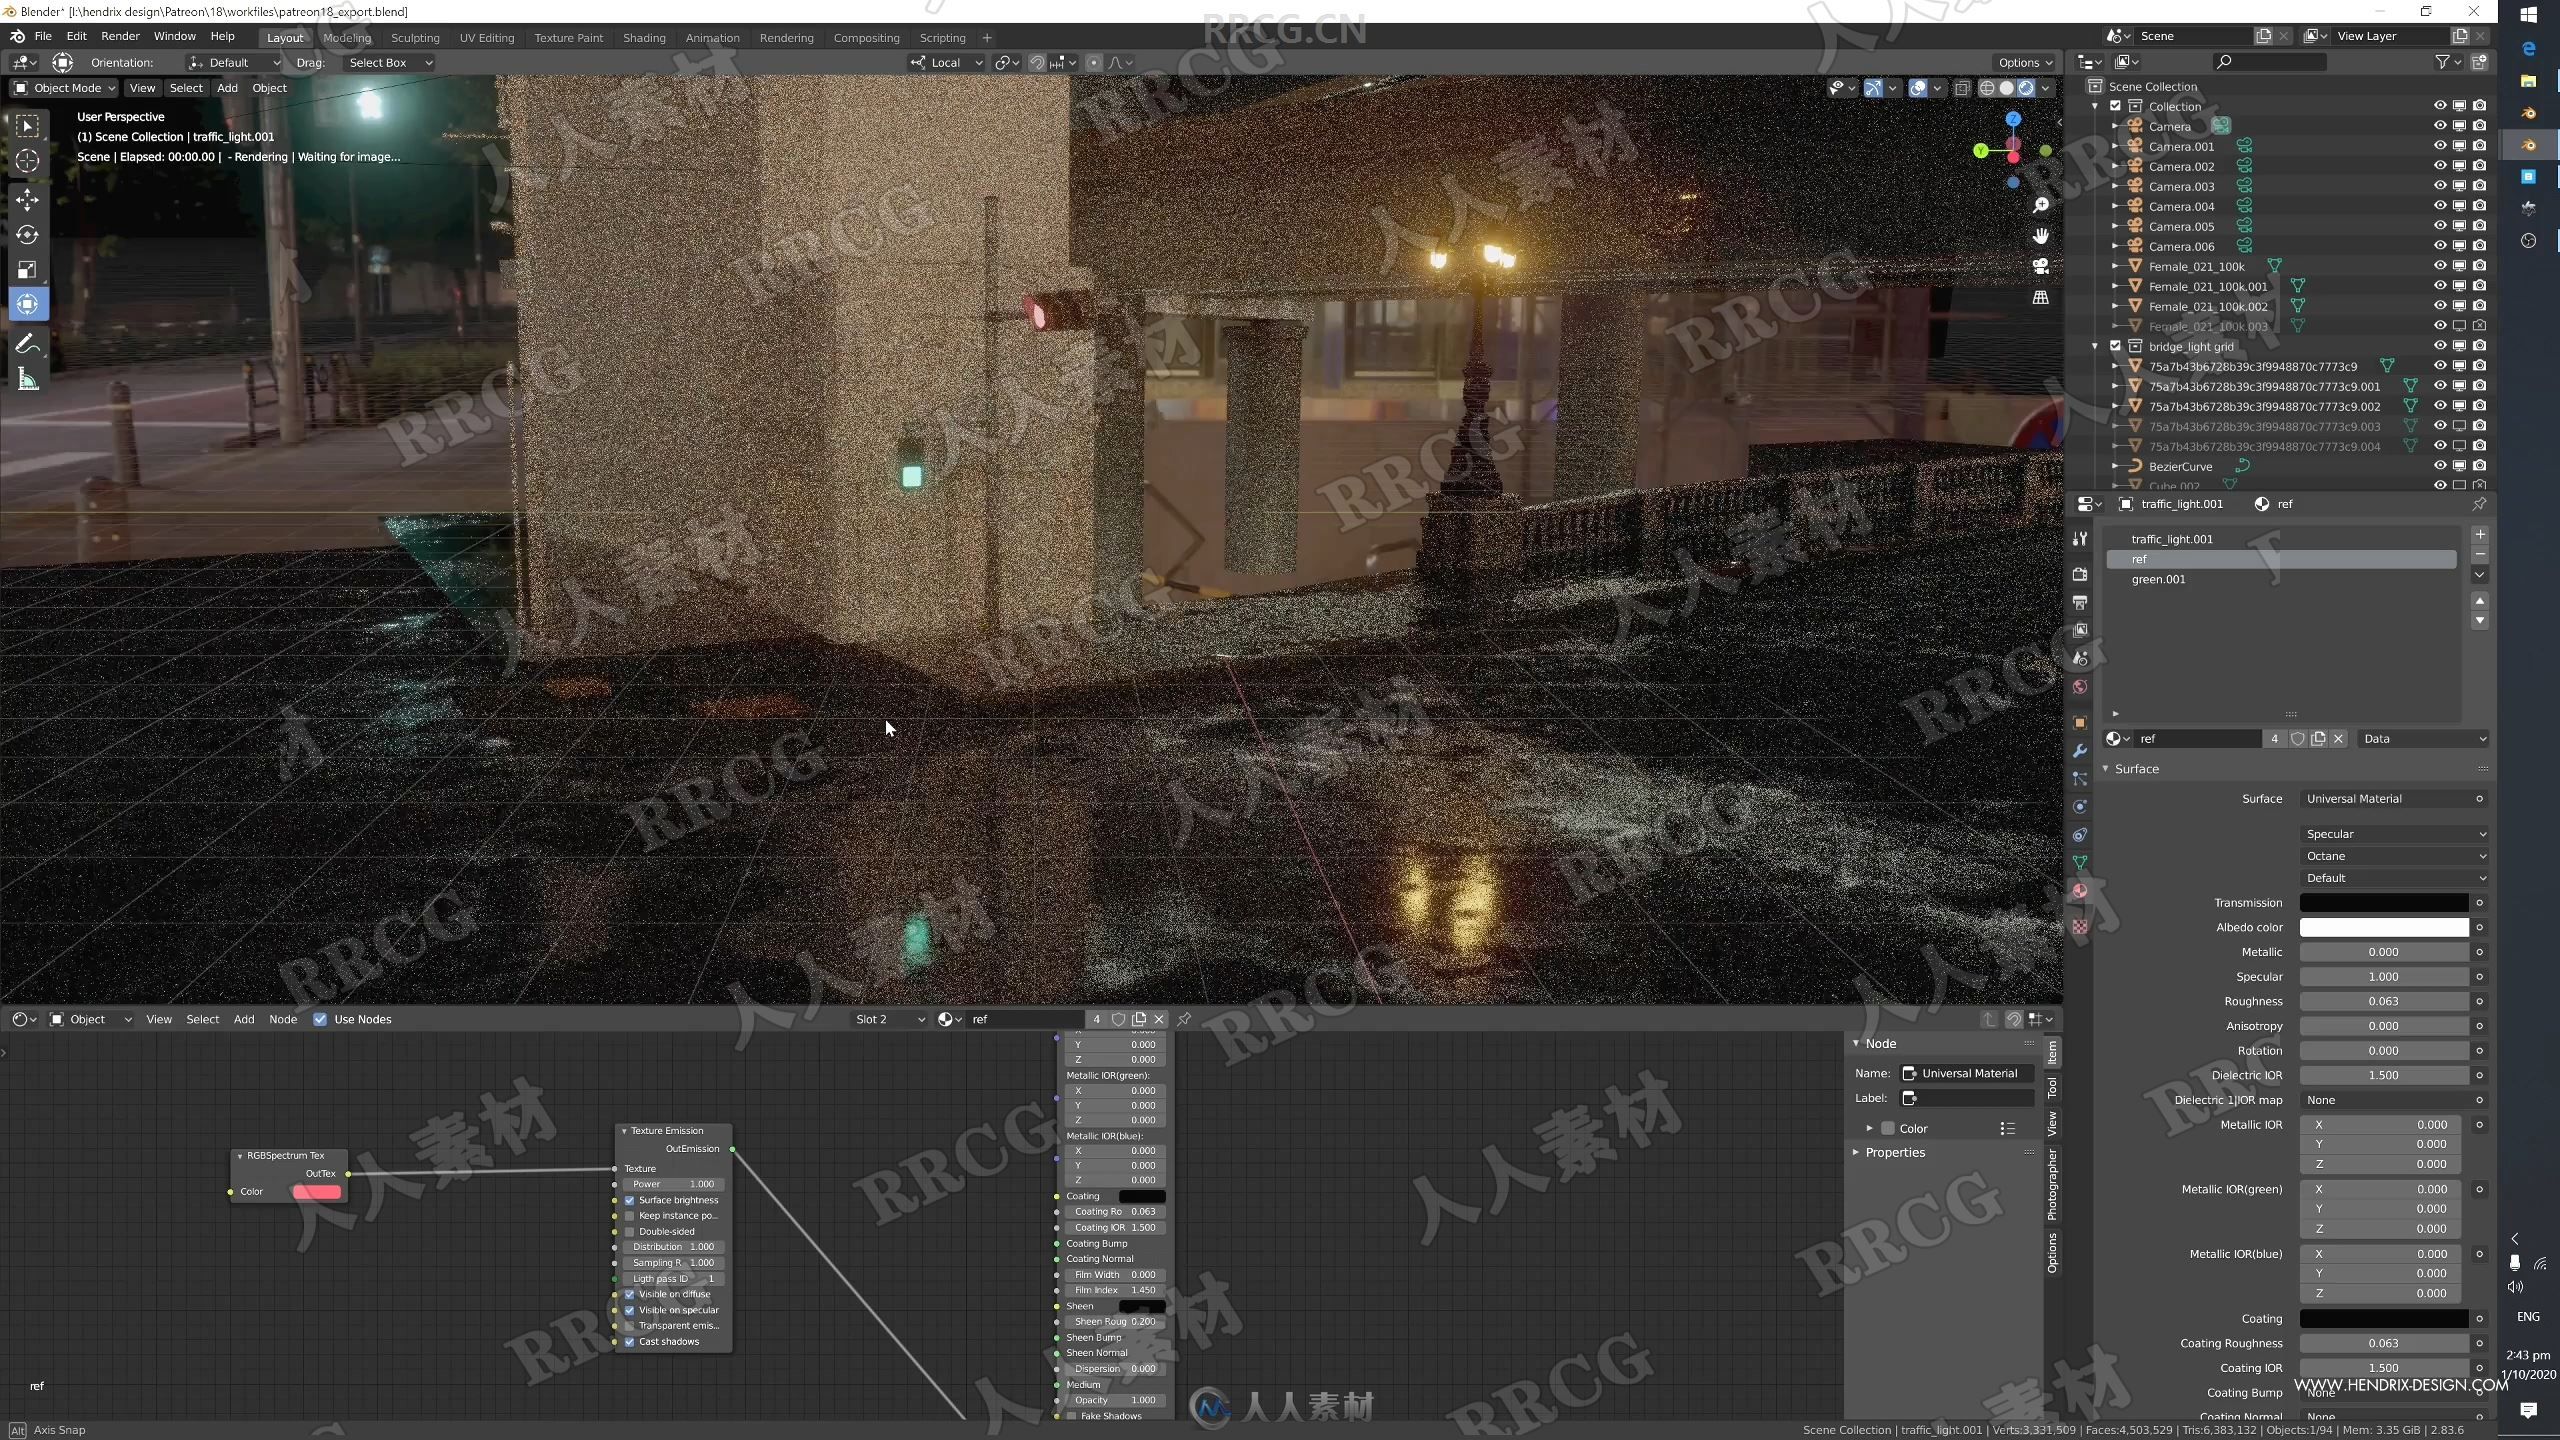 Blender中Octane渲染器完全掌握训练视频教程